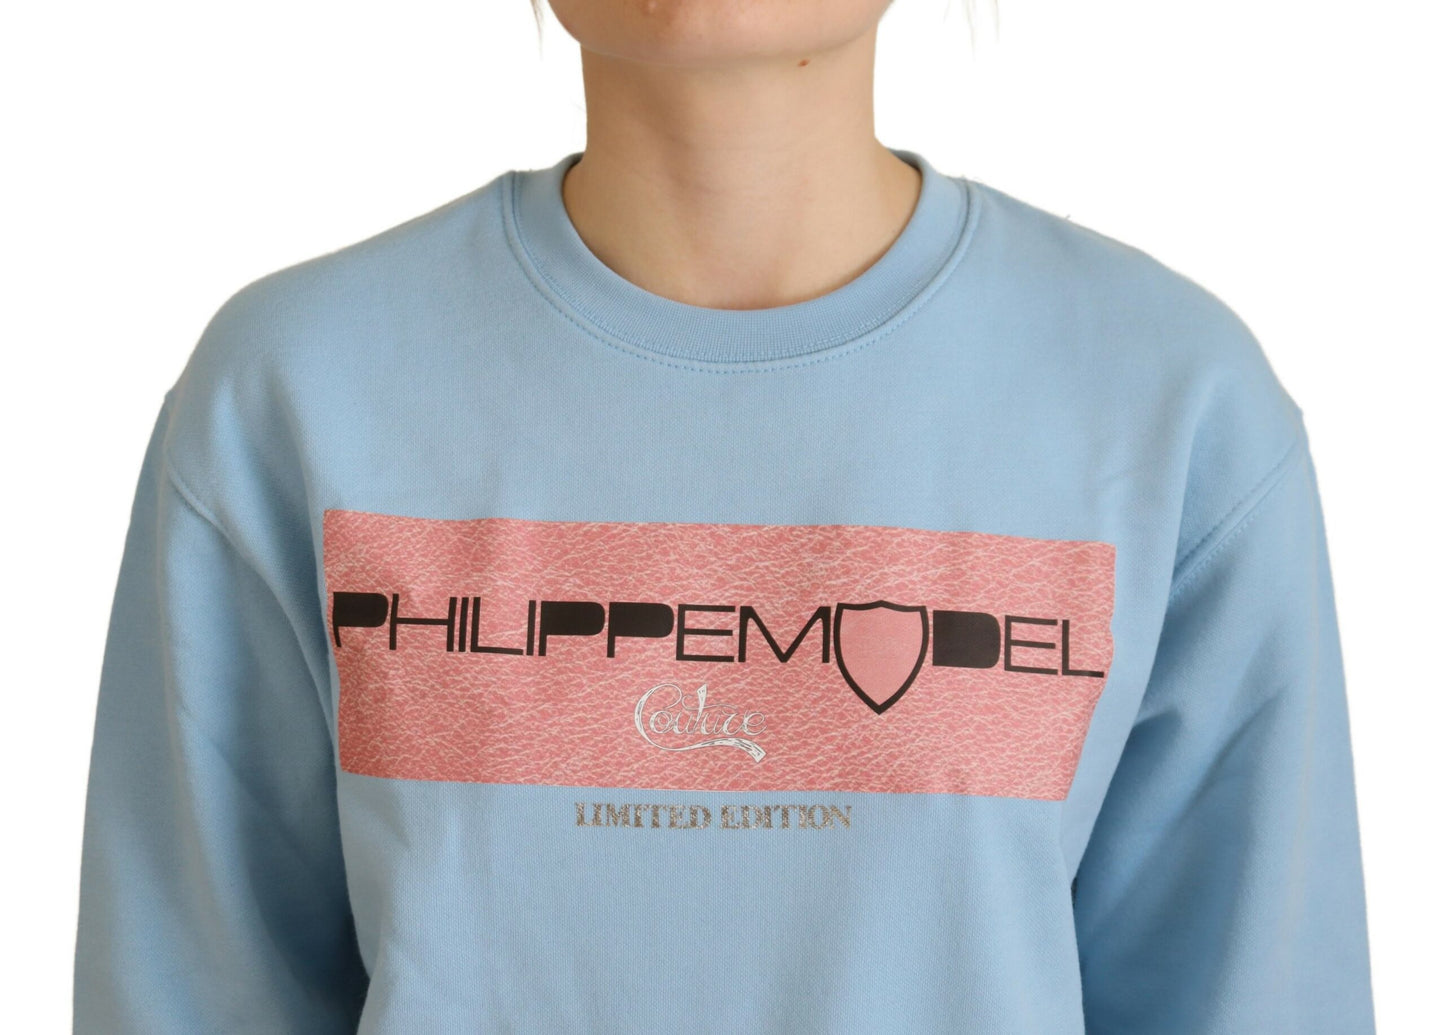 Philippe Model Hellblau Logo gedruckt Langarmpullover